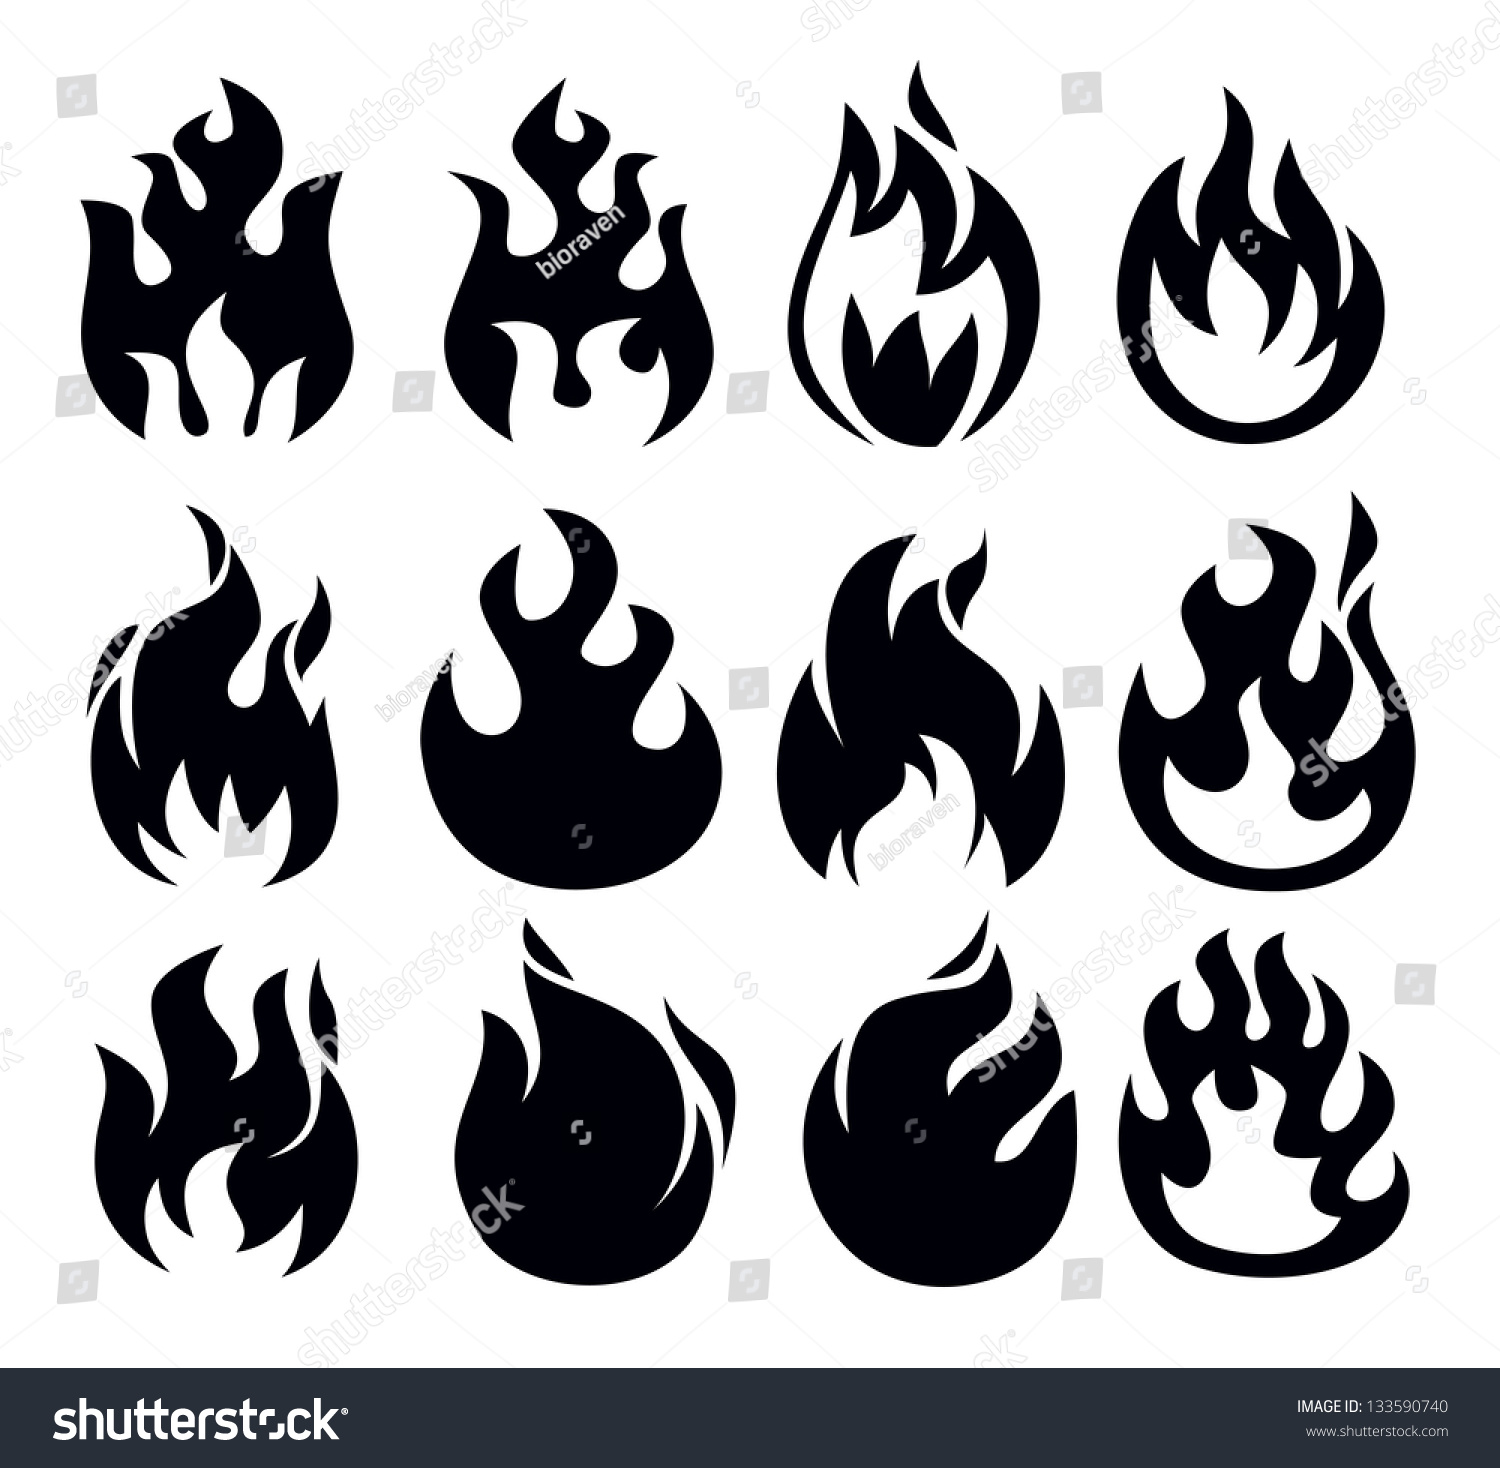 Vector Black Fire Icon Set On White - 133590740 : Shutterstock